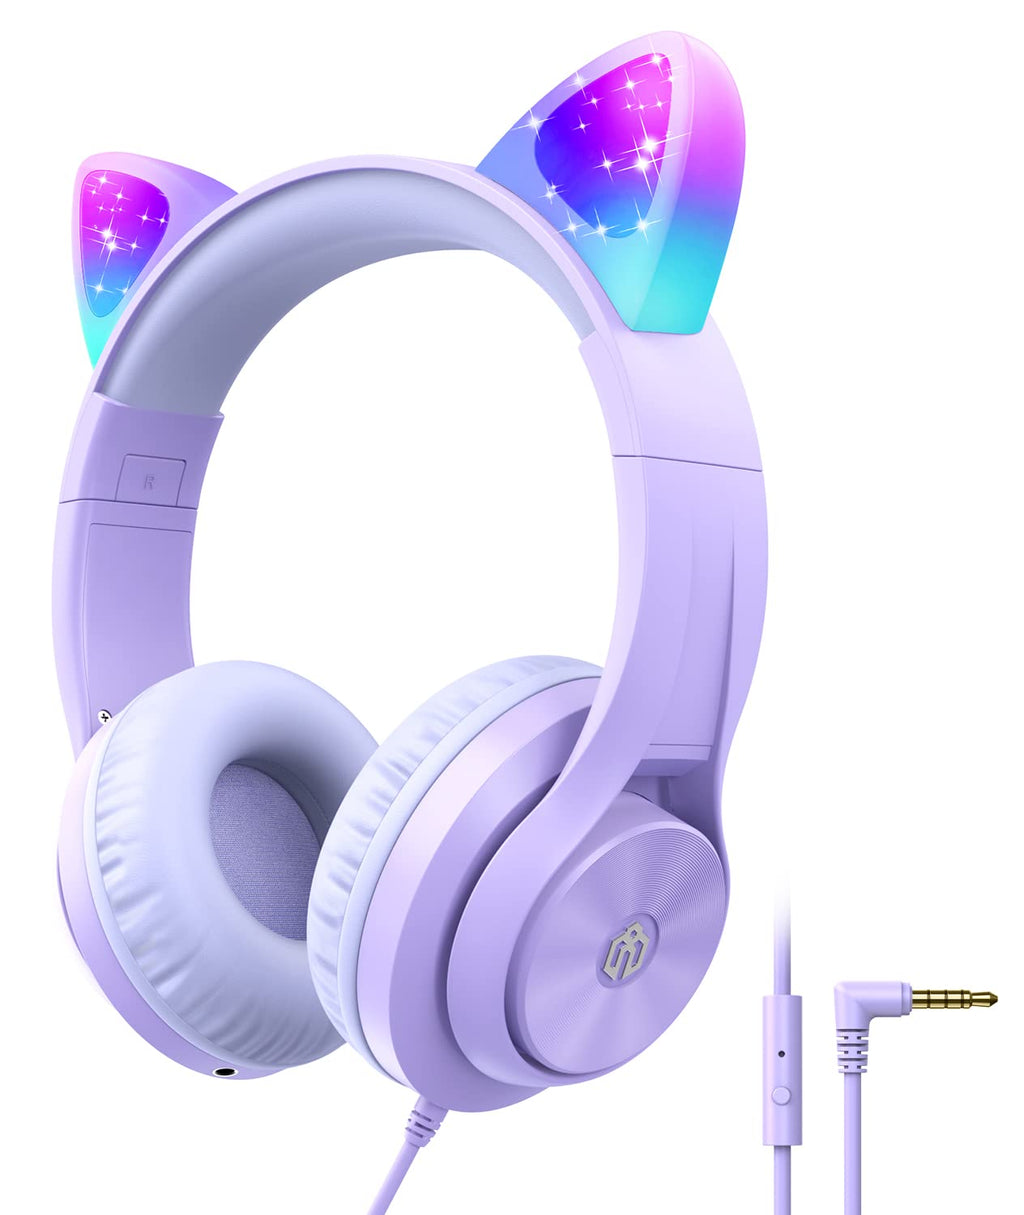  [AUSTRALIA] - Cat Ear Led Light Up Kids Headphones with Microphone, iClever Mewow Wired Headphones -Shareport- 94dB Volume Limited, Foldable Over-Ear Headphones for Kids/School/iPad/Tablet/Travel (Purple) Purple Medium